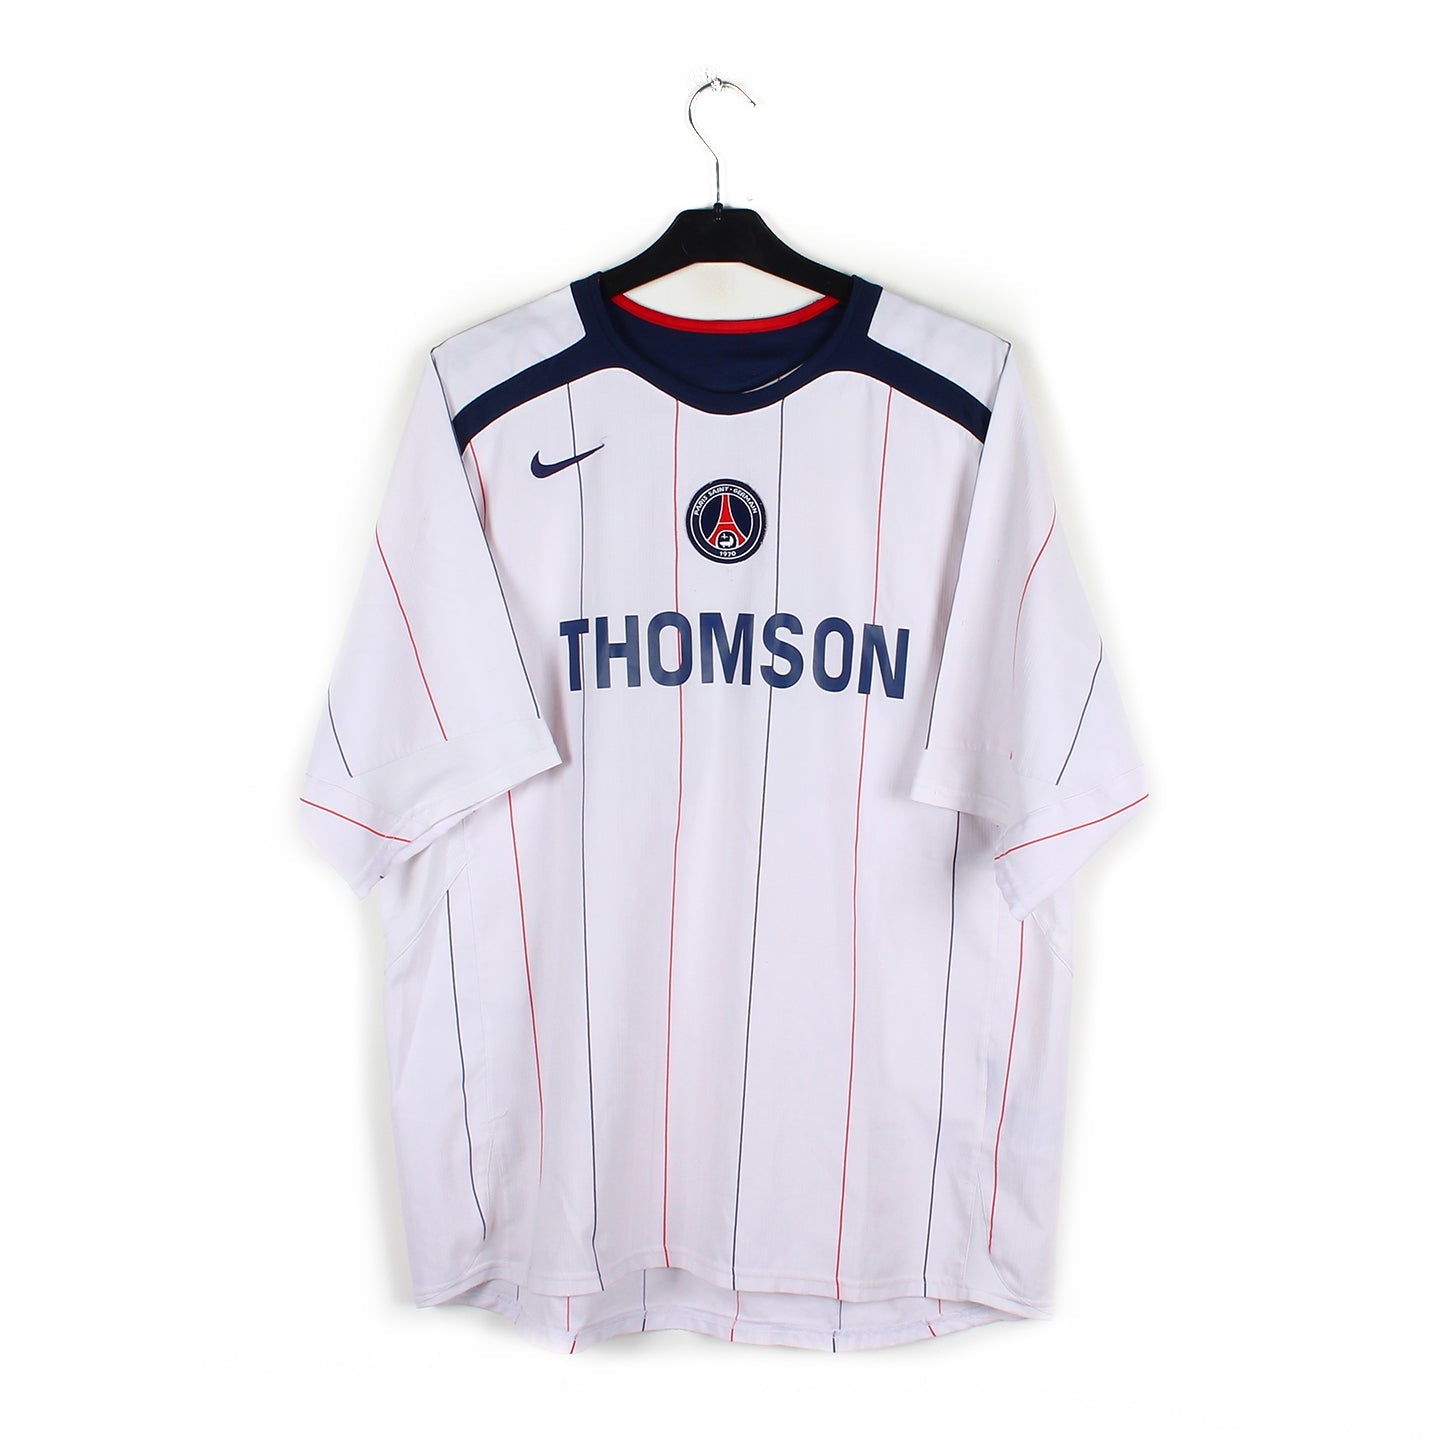 2005/06 PSG Away Football Shirt Dhorasoo #10 / Original Soccer Jersey